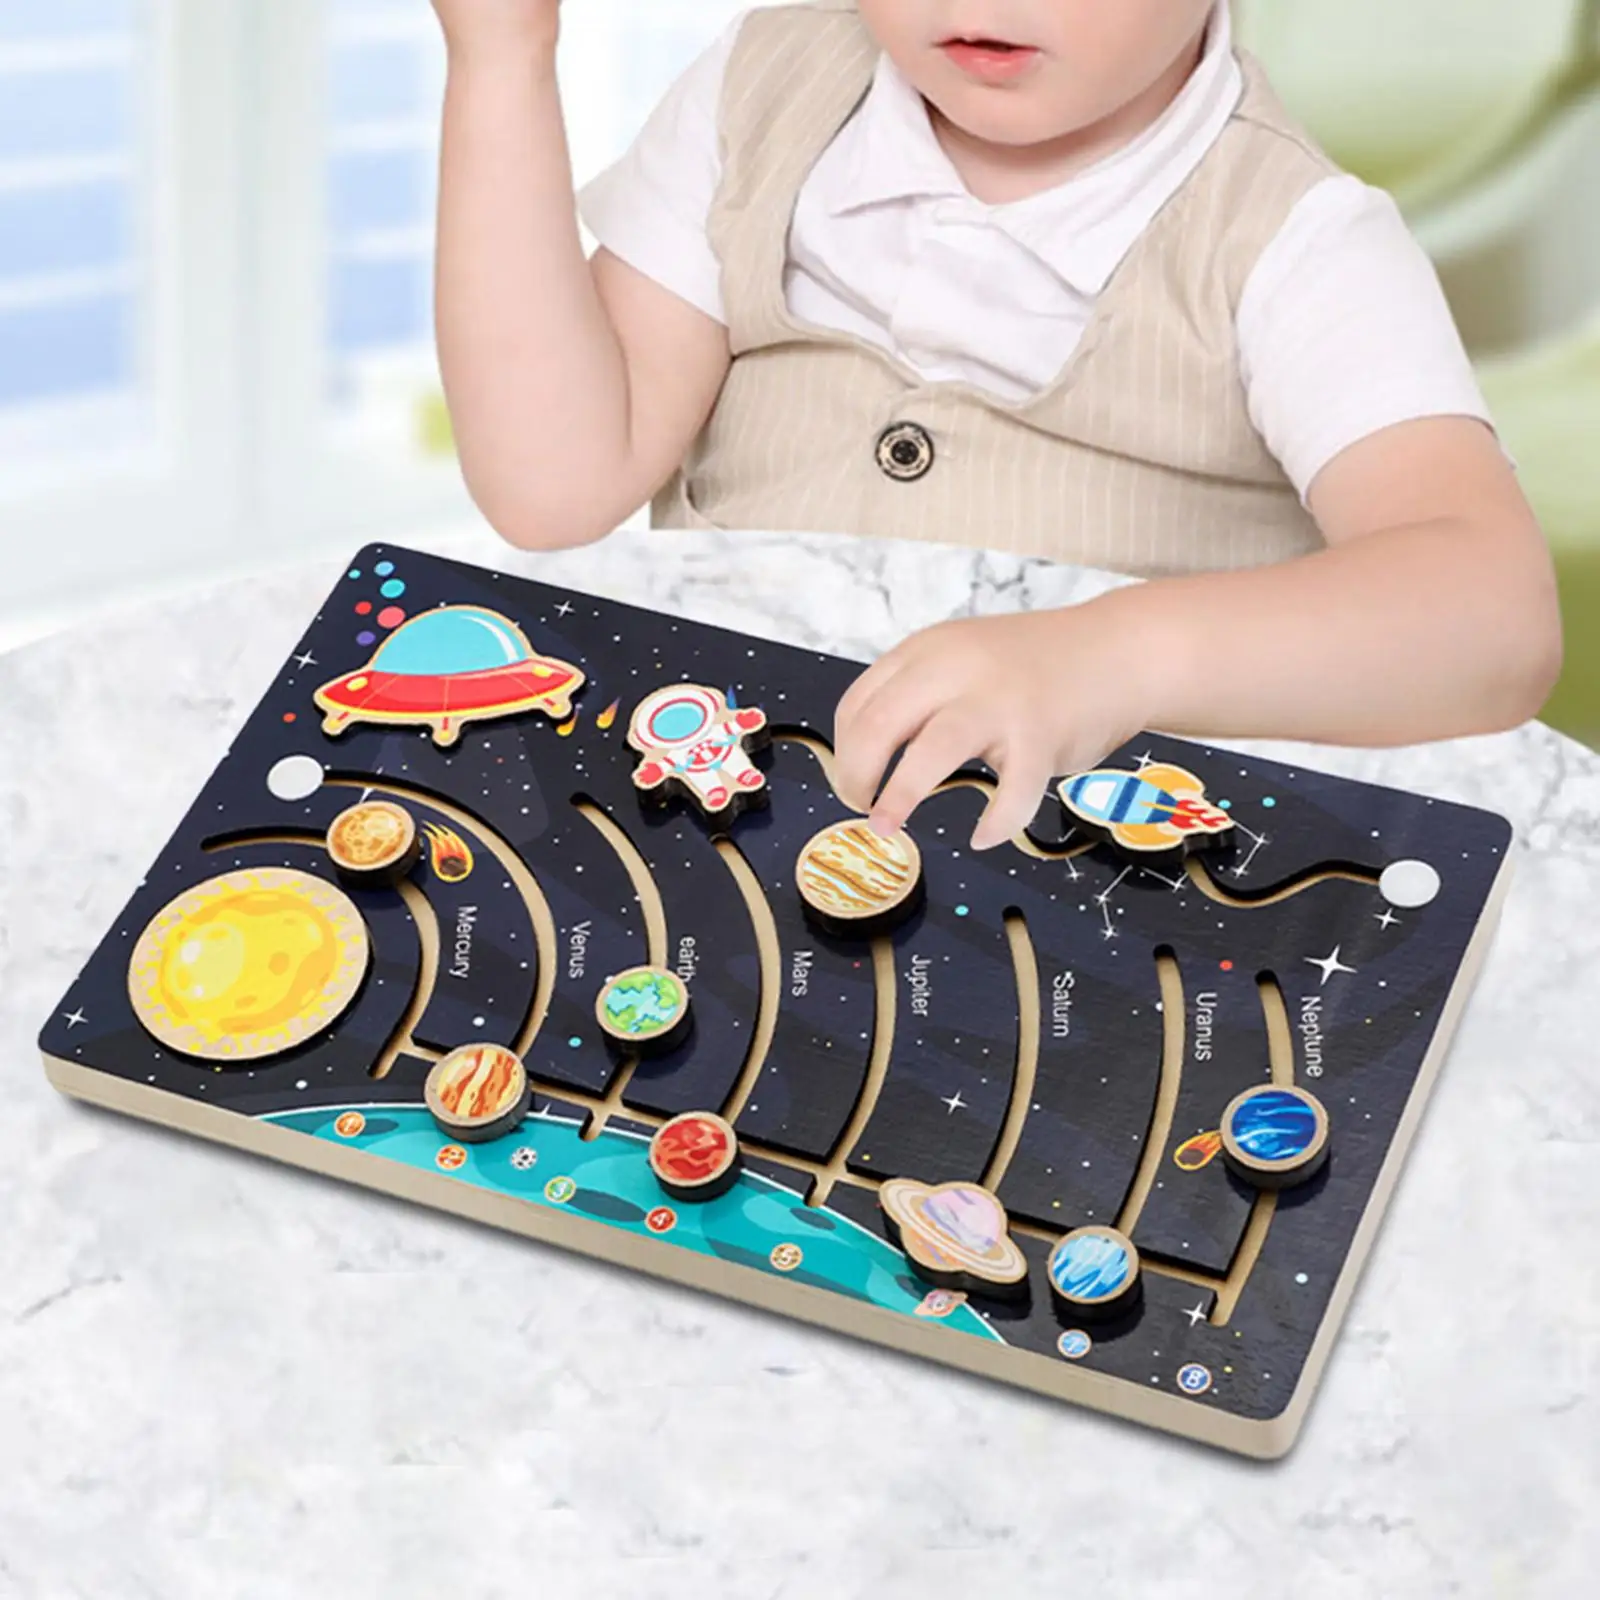 Wood Planets Game Preschool Learning Activities Science Toy Jigsaw for Preschool Kids Children